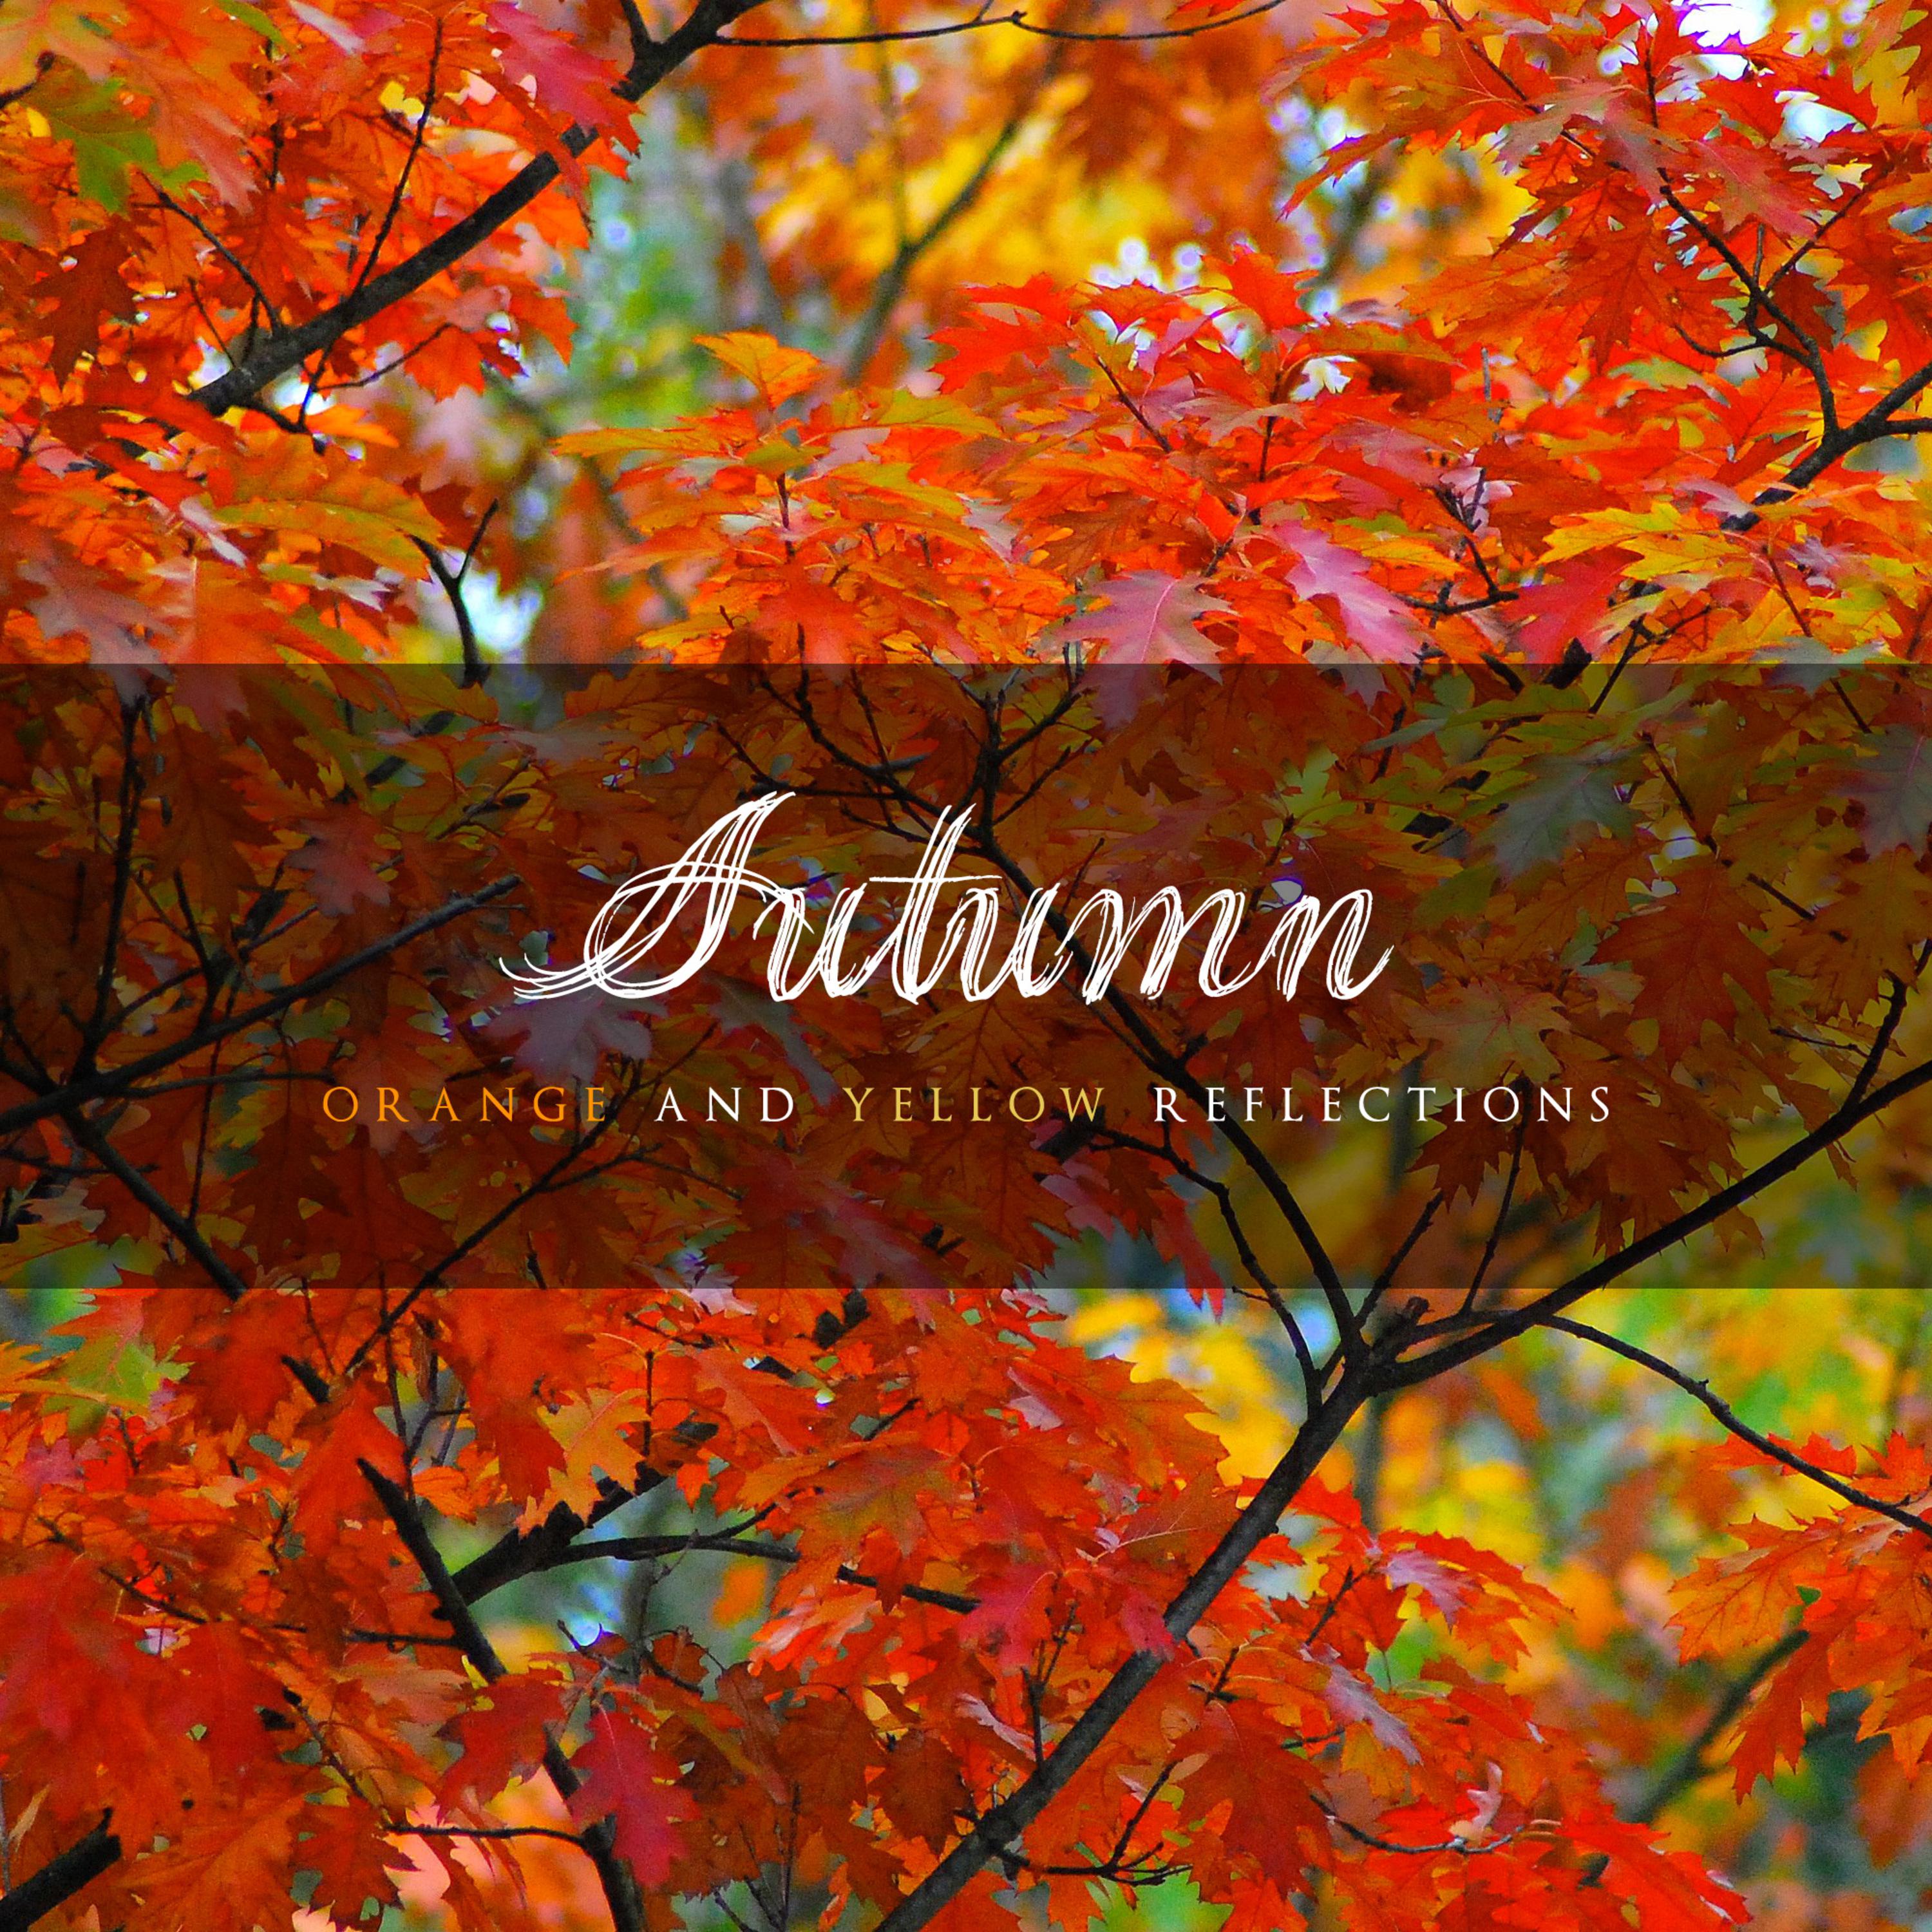 Autumn: Orange and Yellow Reflections